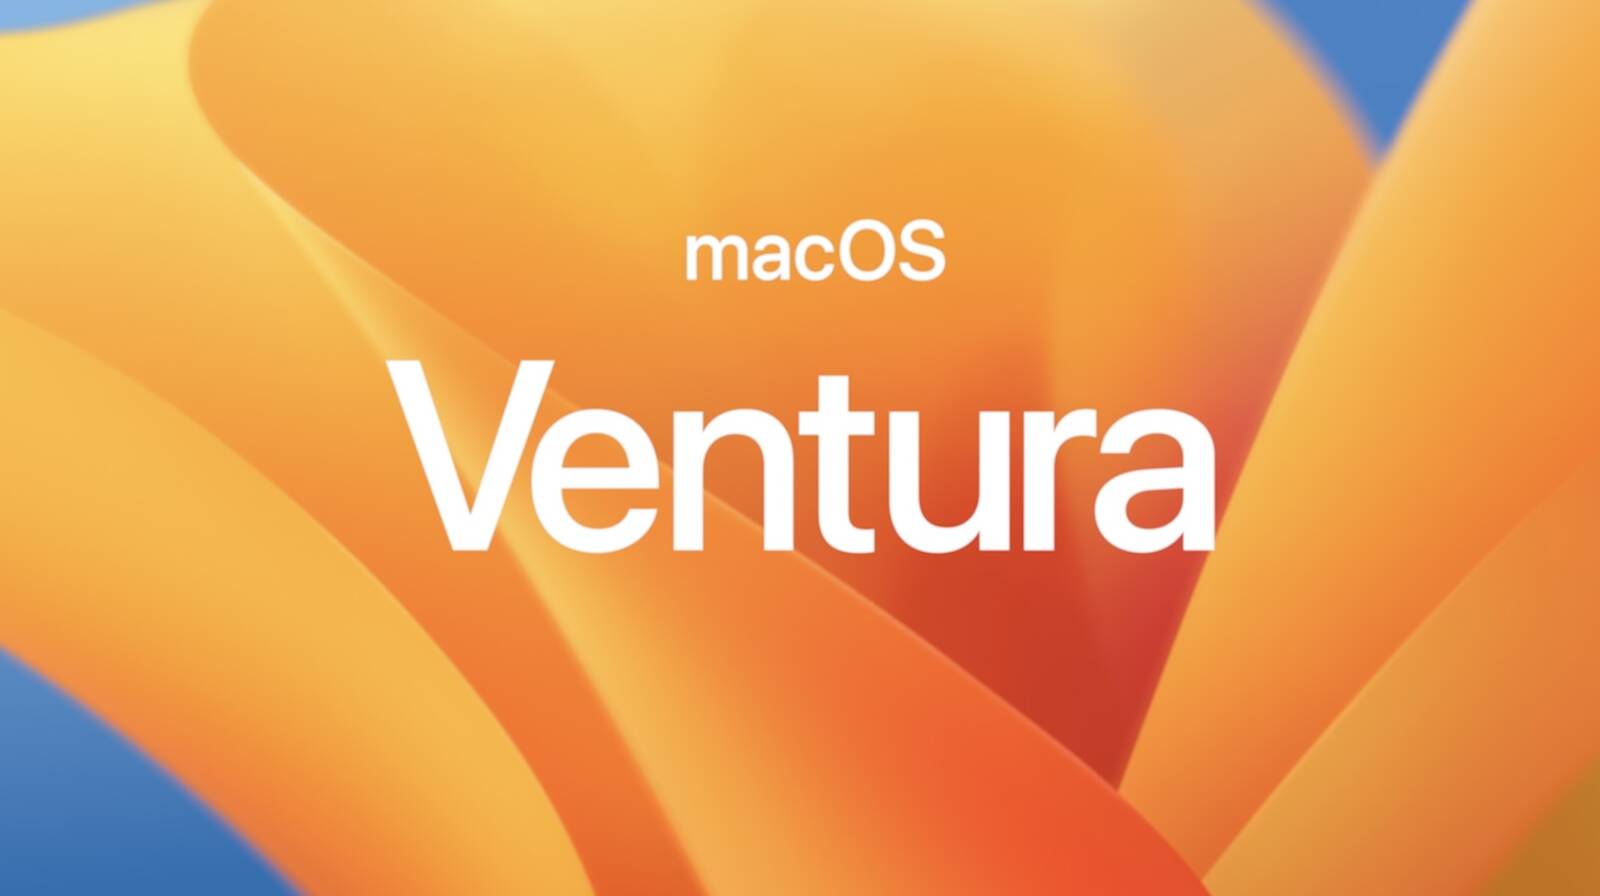 ｢macOS Ventura beta 9｣では公式イメージの壁紙がダイナミック壁紙に